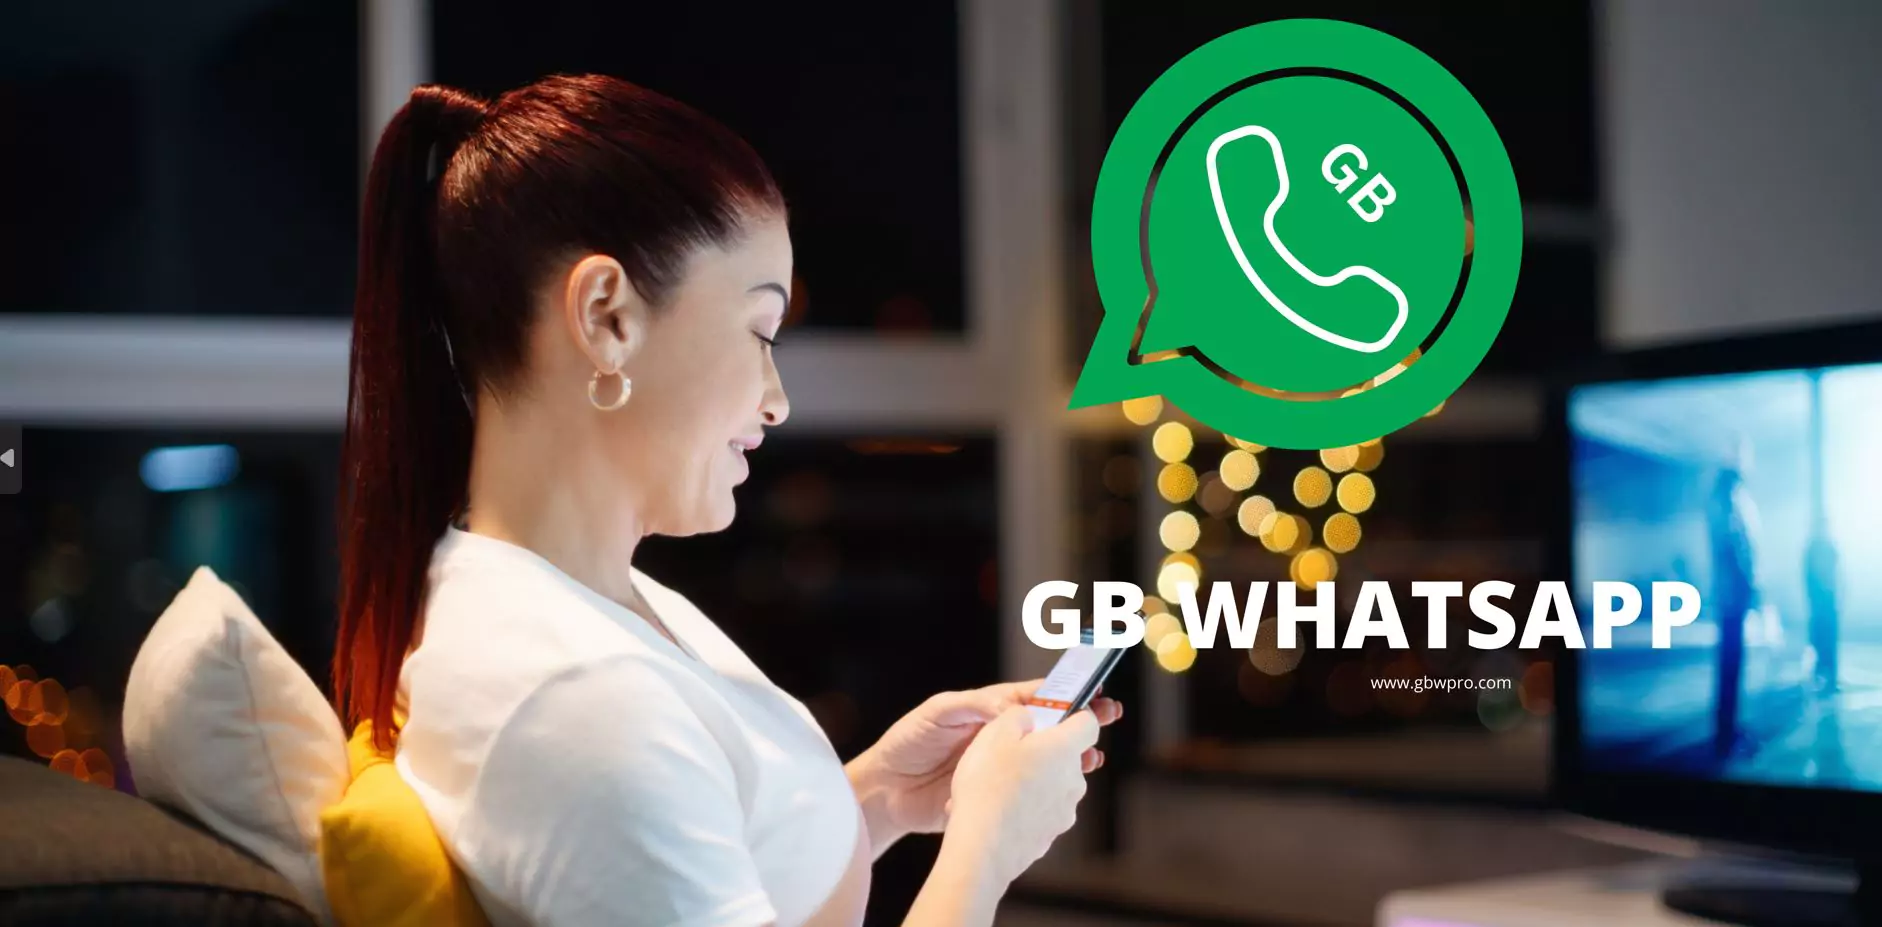 GB WhatsApp APK Download Latest v19.52.3